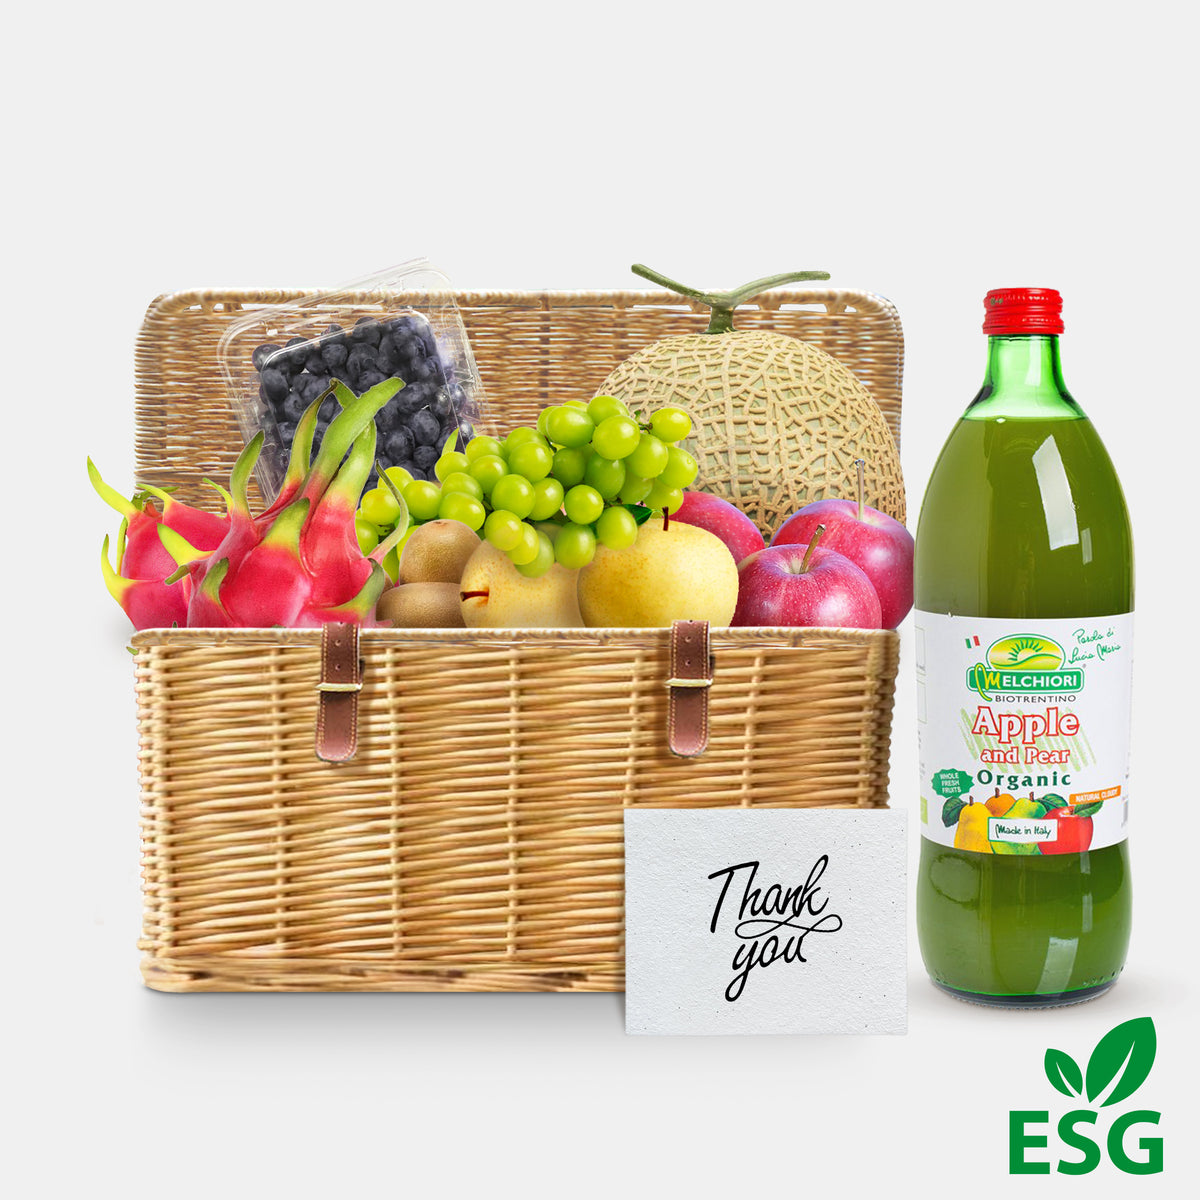 ESG Hamper|Thank you fresh fruit hamper